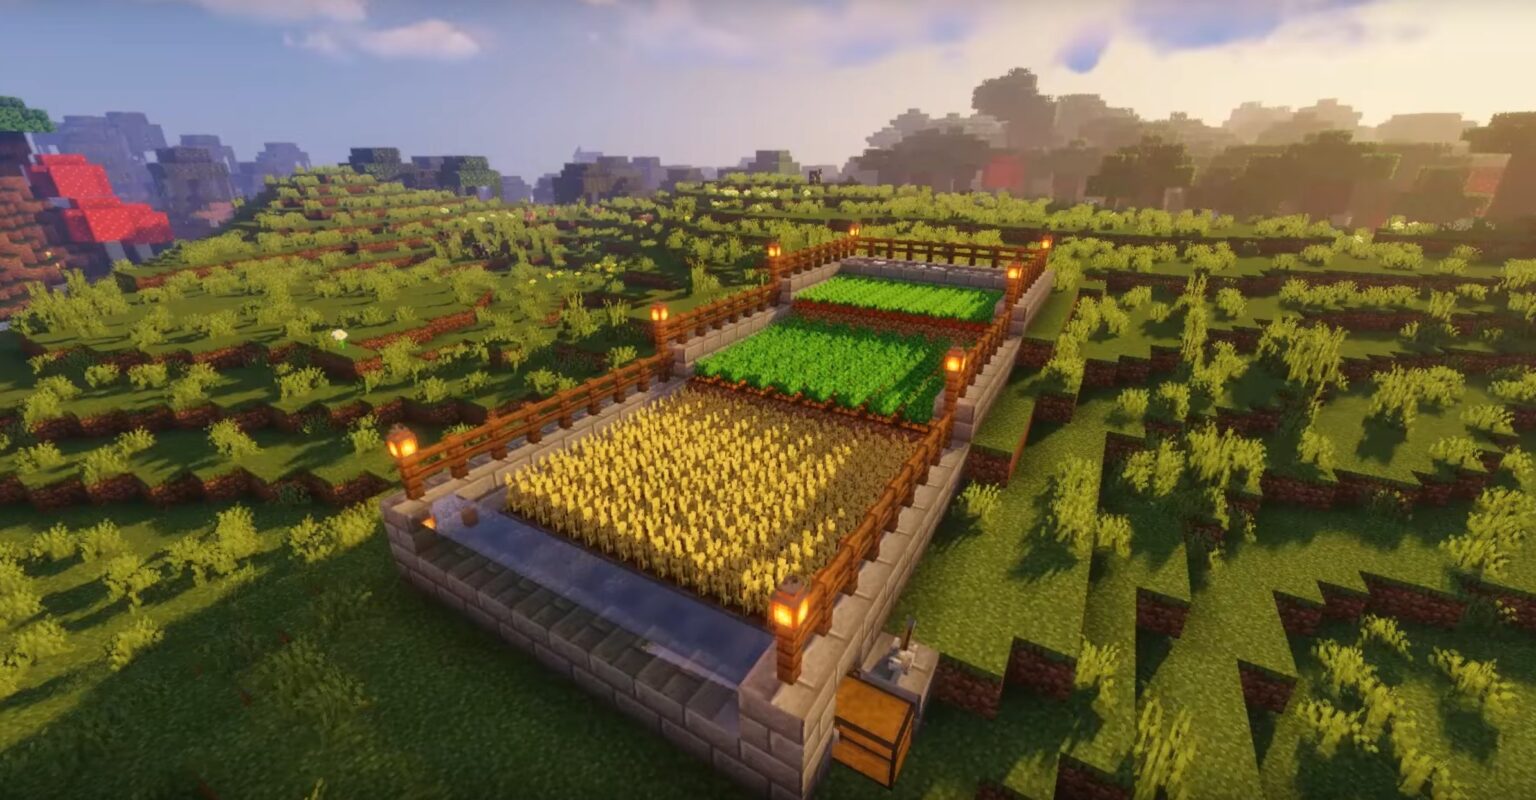 Minecraft Semi-Automatic Crop Farm Ideas and Design